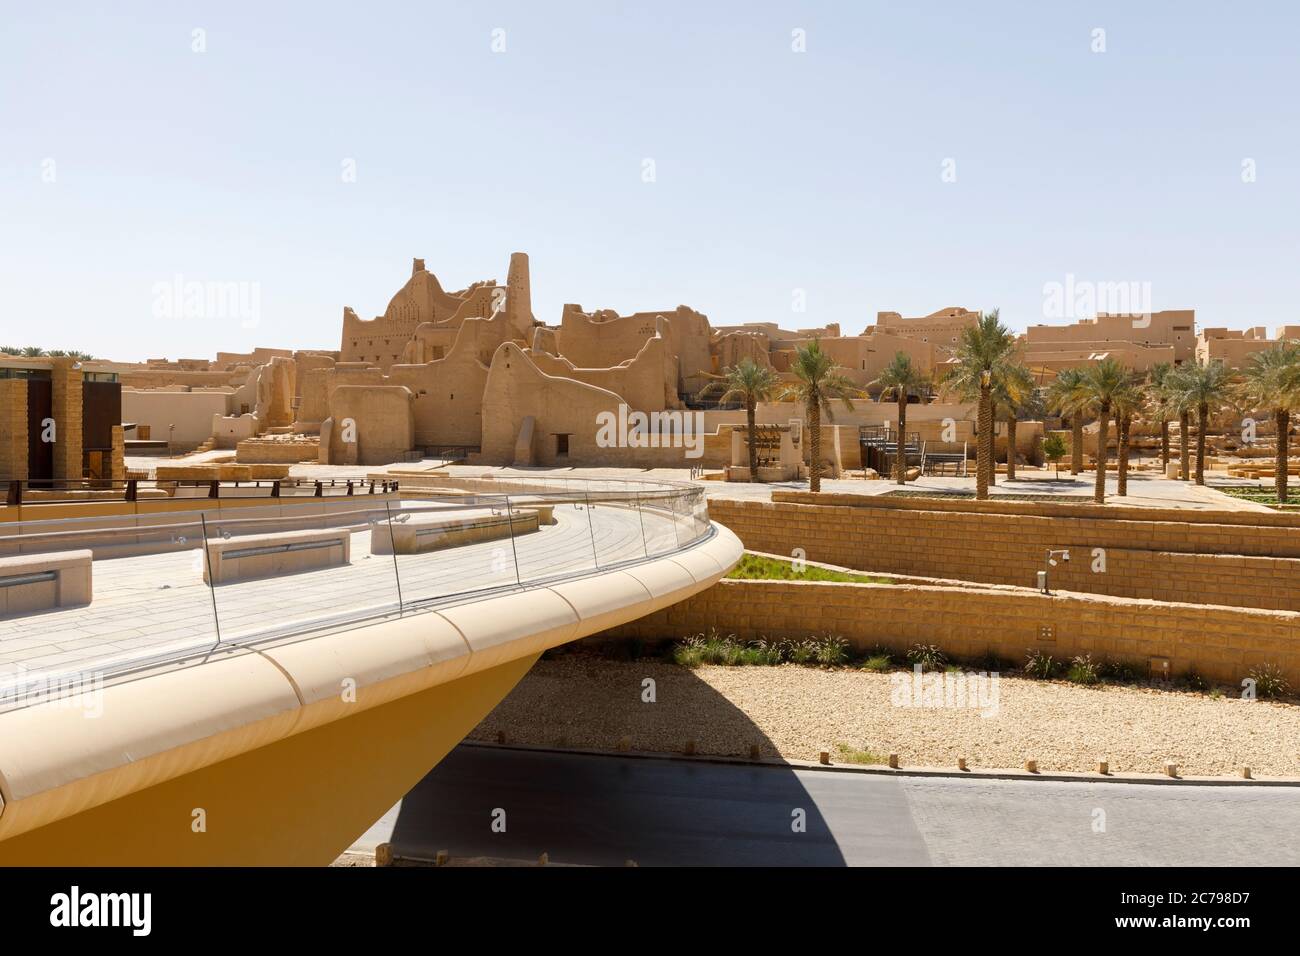 Riad, Saudi Arabia, February 14 2020: Pedestrian bridge to the historic district Al-Diraiyah of Riyadh in Saudi Arabia Stock Photo